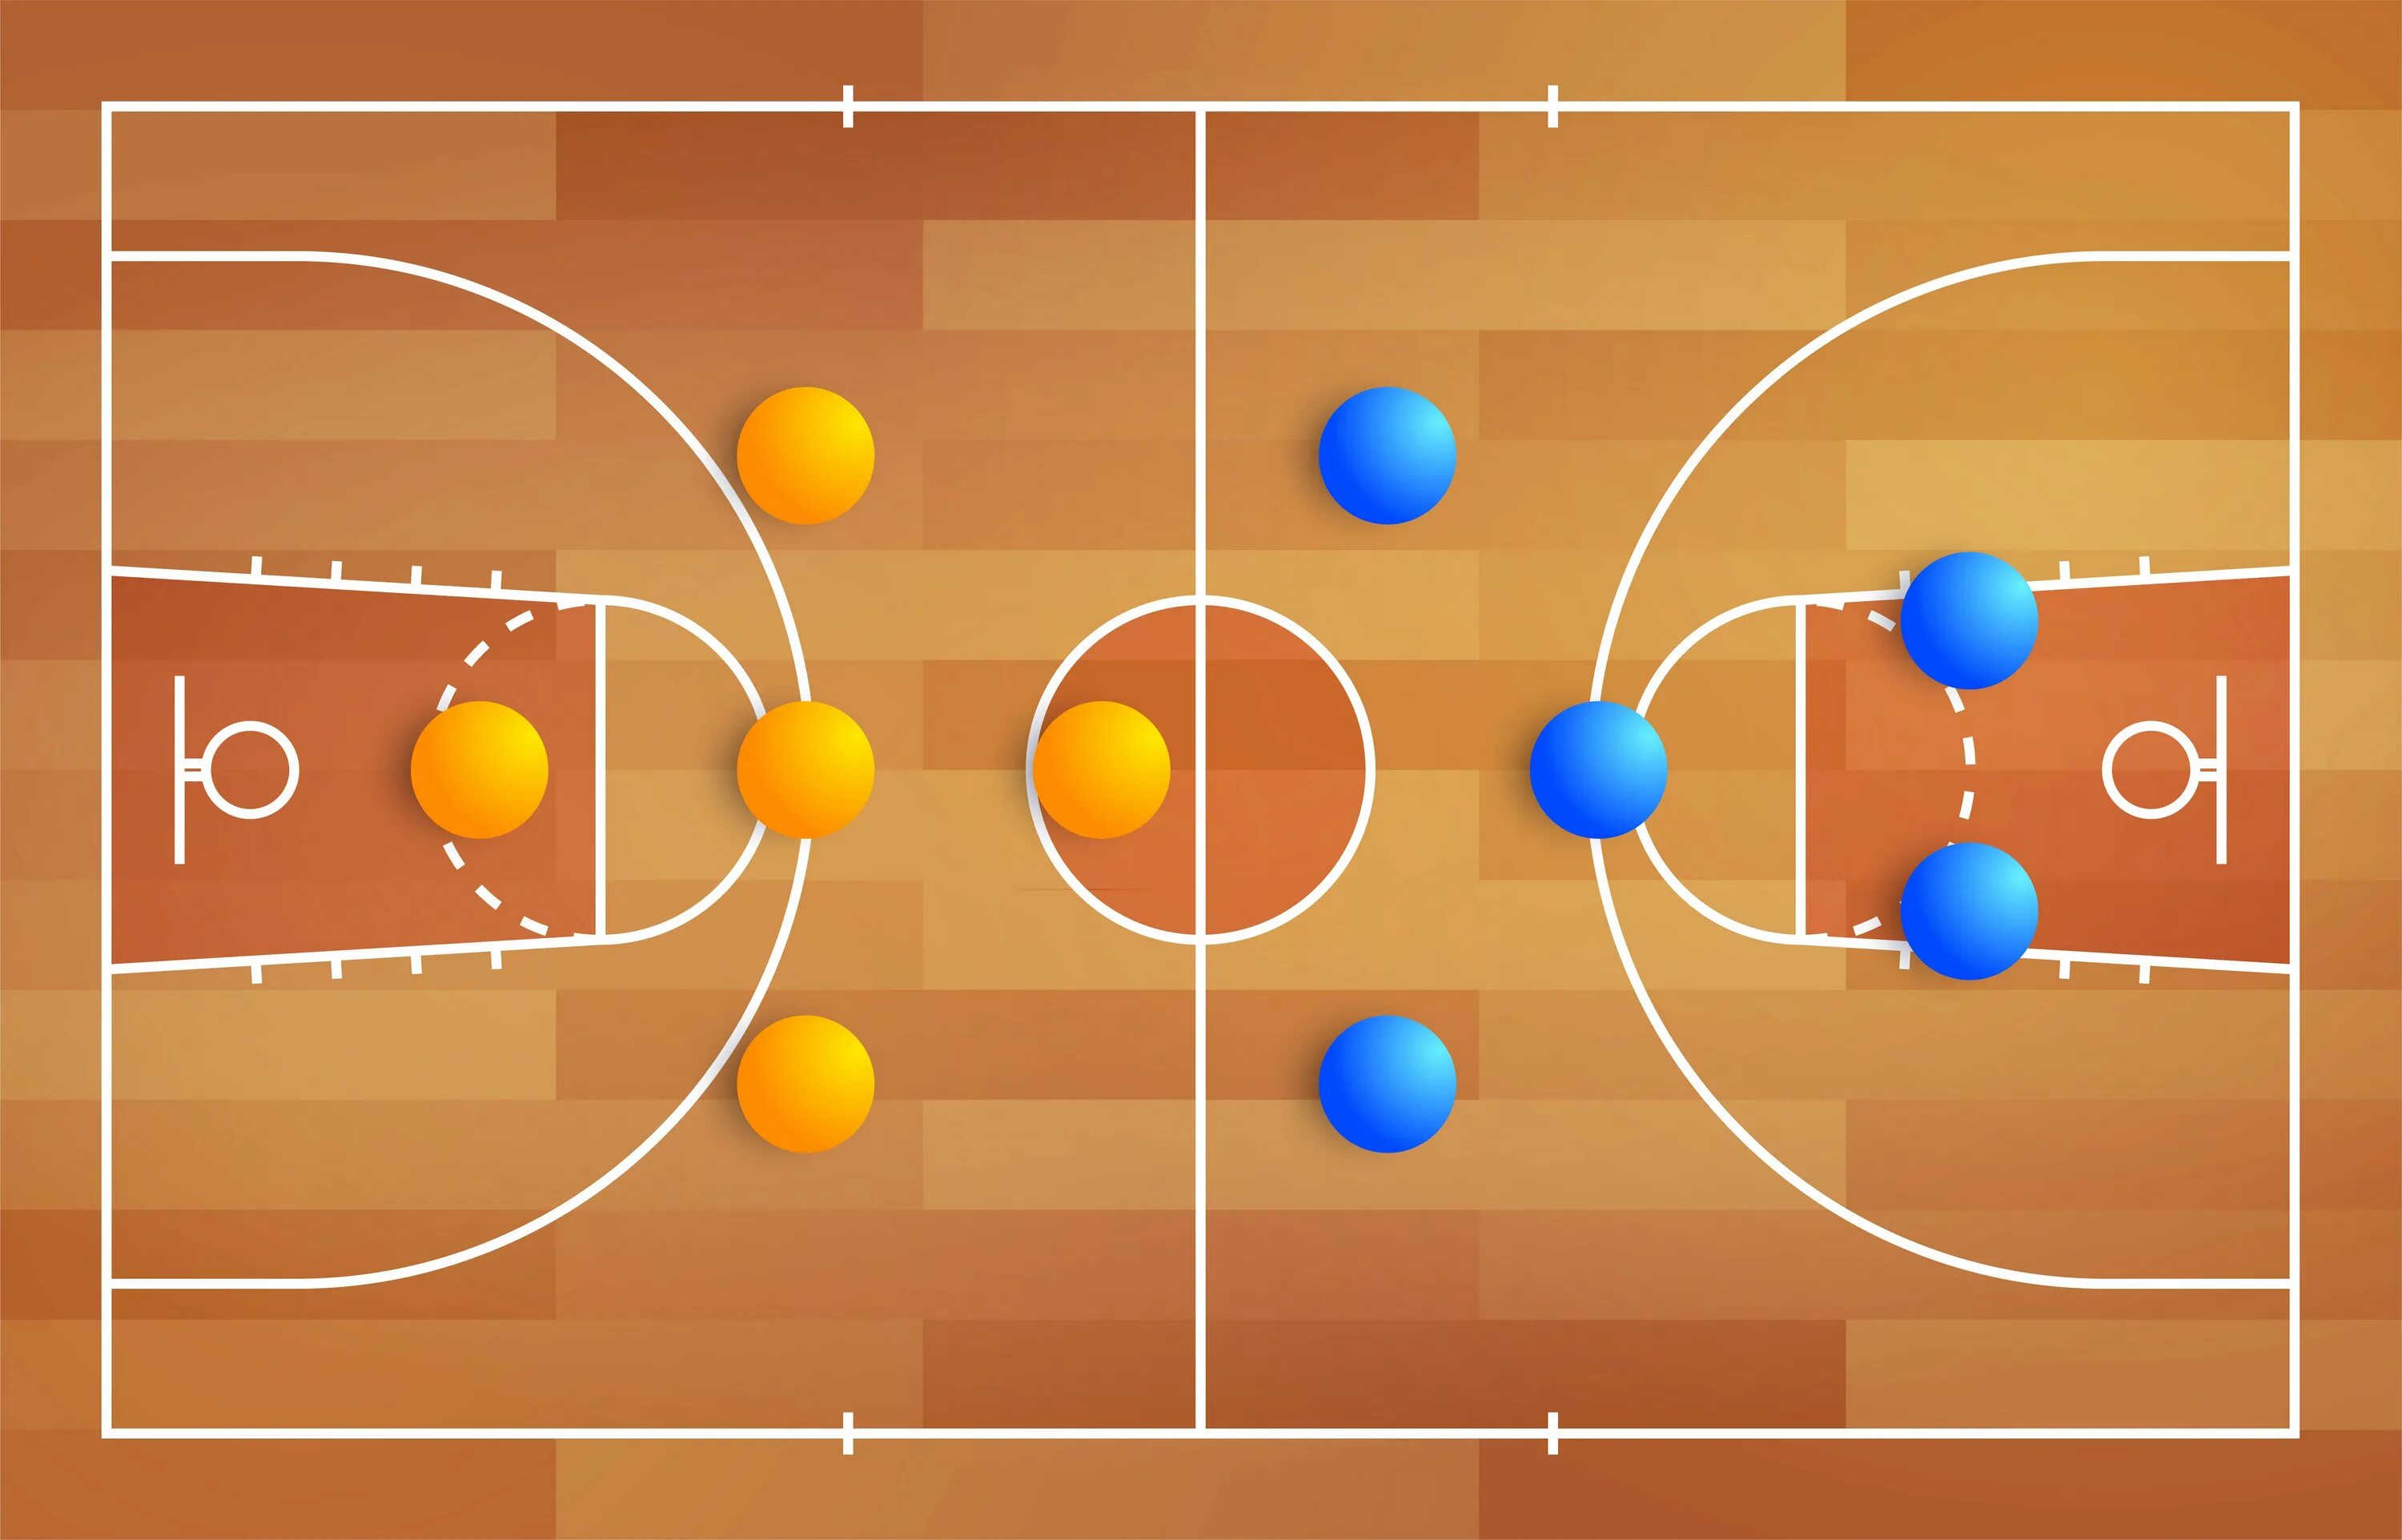 Баскетбол расстановка игроков на площадке схема. Баскетбол расположение игроков на площадке. Расстановка игроков в баскетболе. Расположение игроков в баскетболе схема.